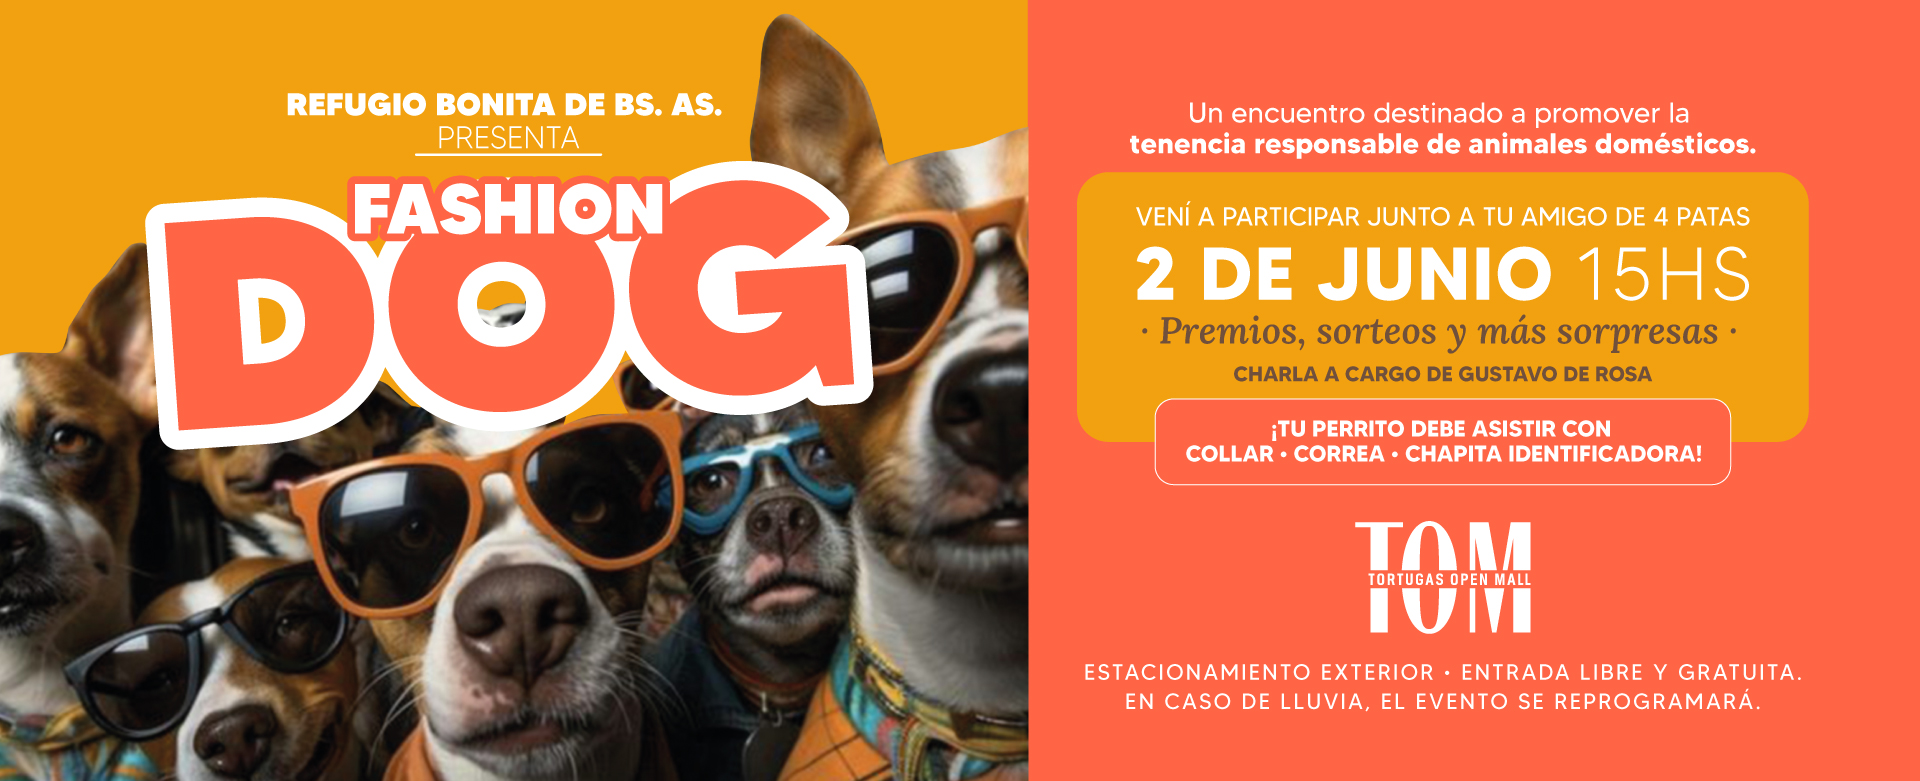 Tortugas Open Mall junto a Refugio Bonita presentan Fashion Dog: un evento para promover la adopción responsable